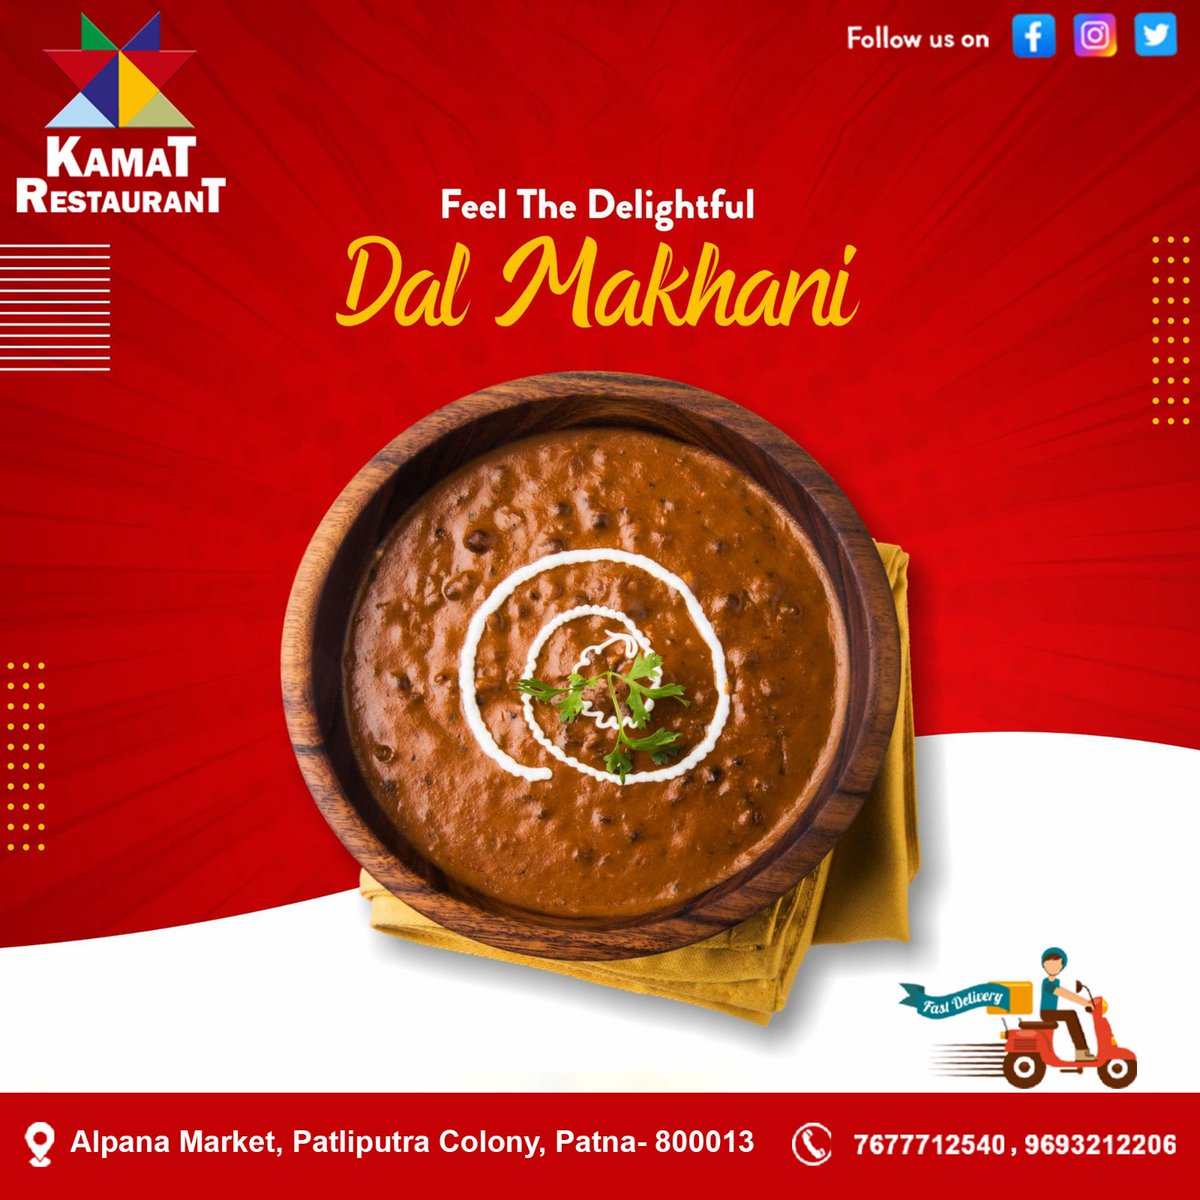 Feel the delightful dal makhani
Free Home Delivery '𝐎𝐫𝐝𝐞𝐫 𝐍𝐨𝐰'
Please call on 𝟎𝟔𝟏𝟐 - 𝟐𝟐𝟔𝟔𝟐𝟎𝟕 +𝟗𝟏 𝟕𝟔𝟕𝟕𝟕𝟏𝟐𝟓𝟒𝟎, +𝟗𝟏 𝟗𝟔𝟗𝟑𝟐𝟏𝟐𝟐𝟎𝟔
#indianfood #fastdelivery #kamatrestaurant #deliciousmeals #patnacity #dinner #family #patna #bihar #kamat #India